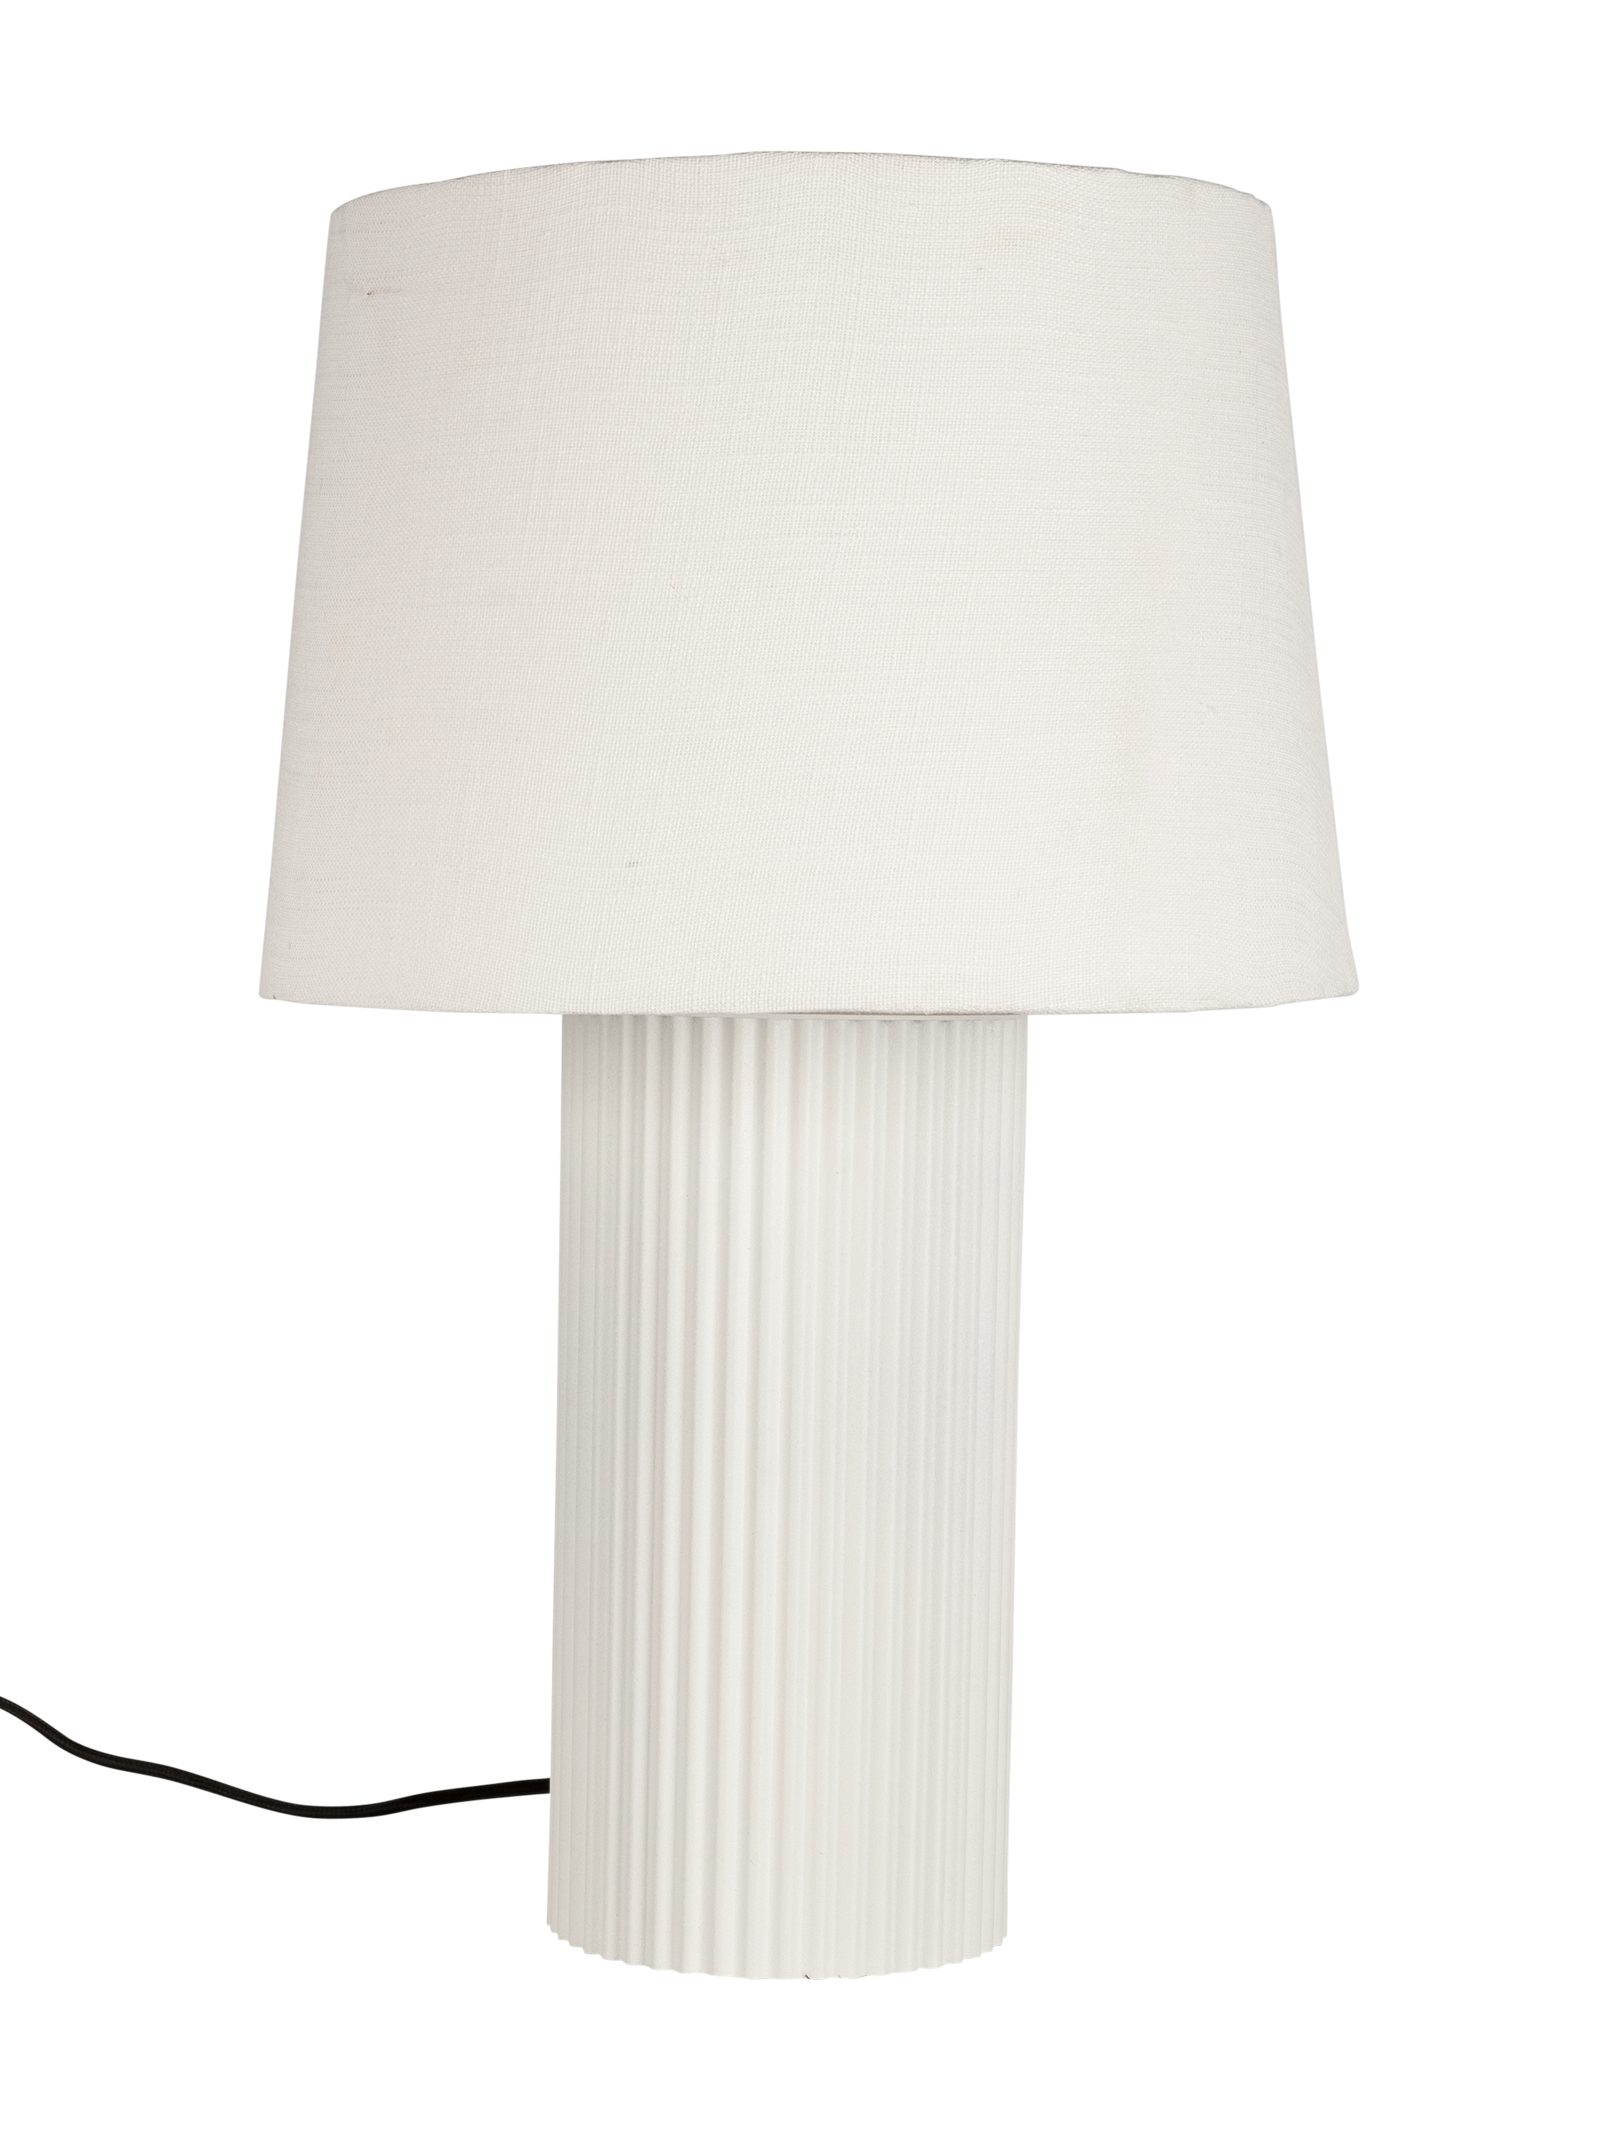 Raphael Table Light in Bianco